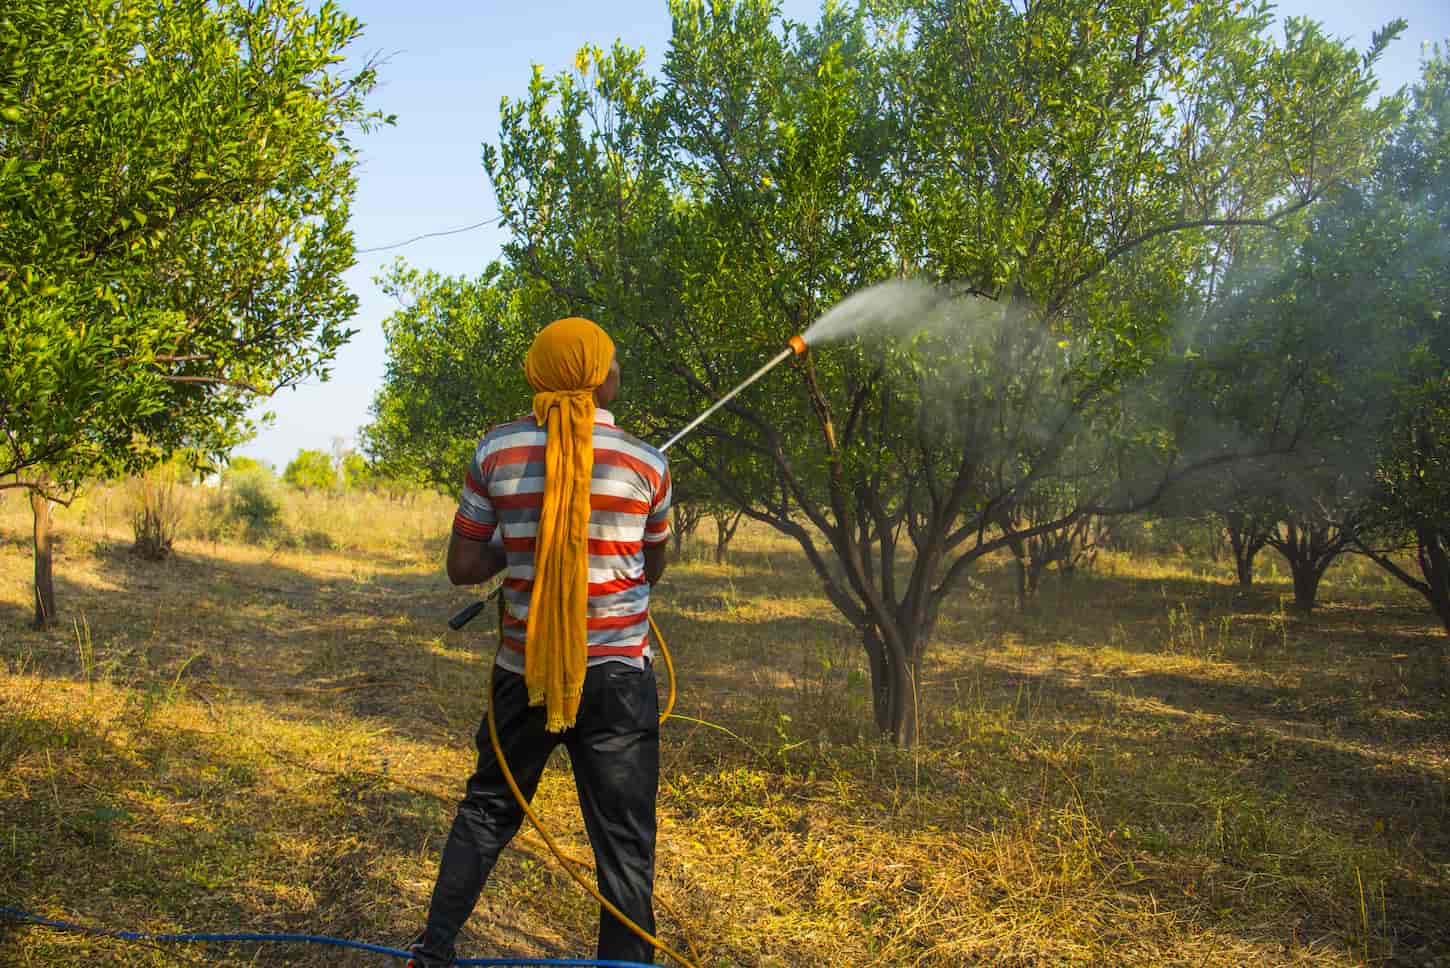 An image of a farmer spraying fertilizer on an orange tree field.